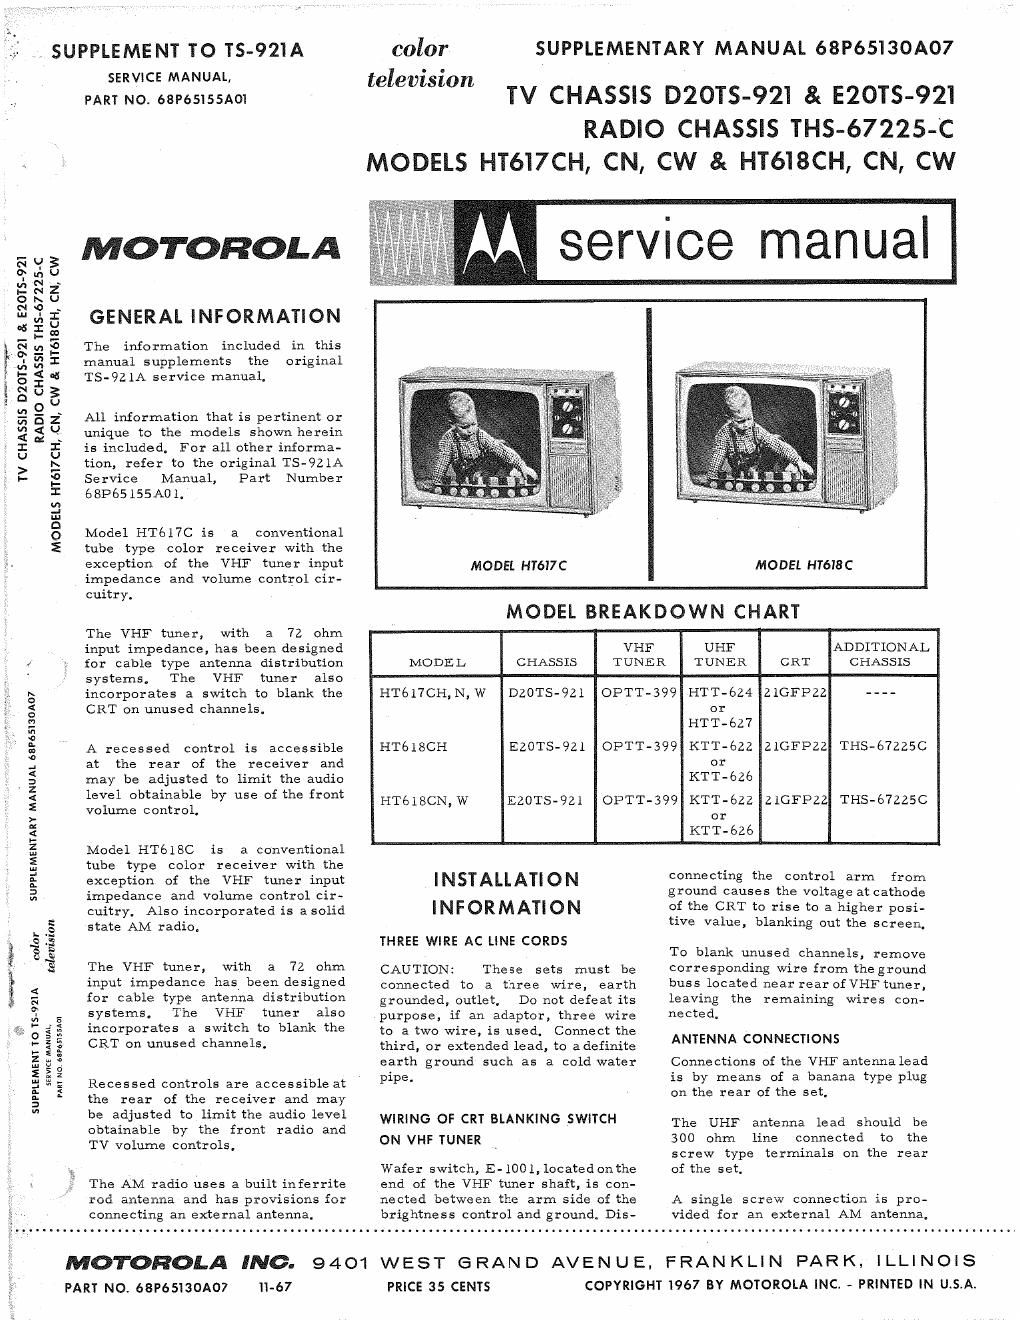 motorola ht 617 cw service manual